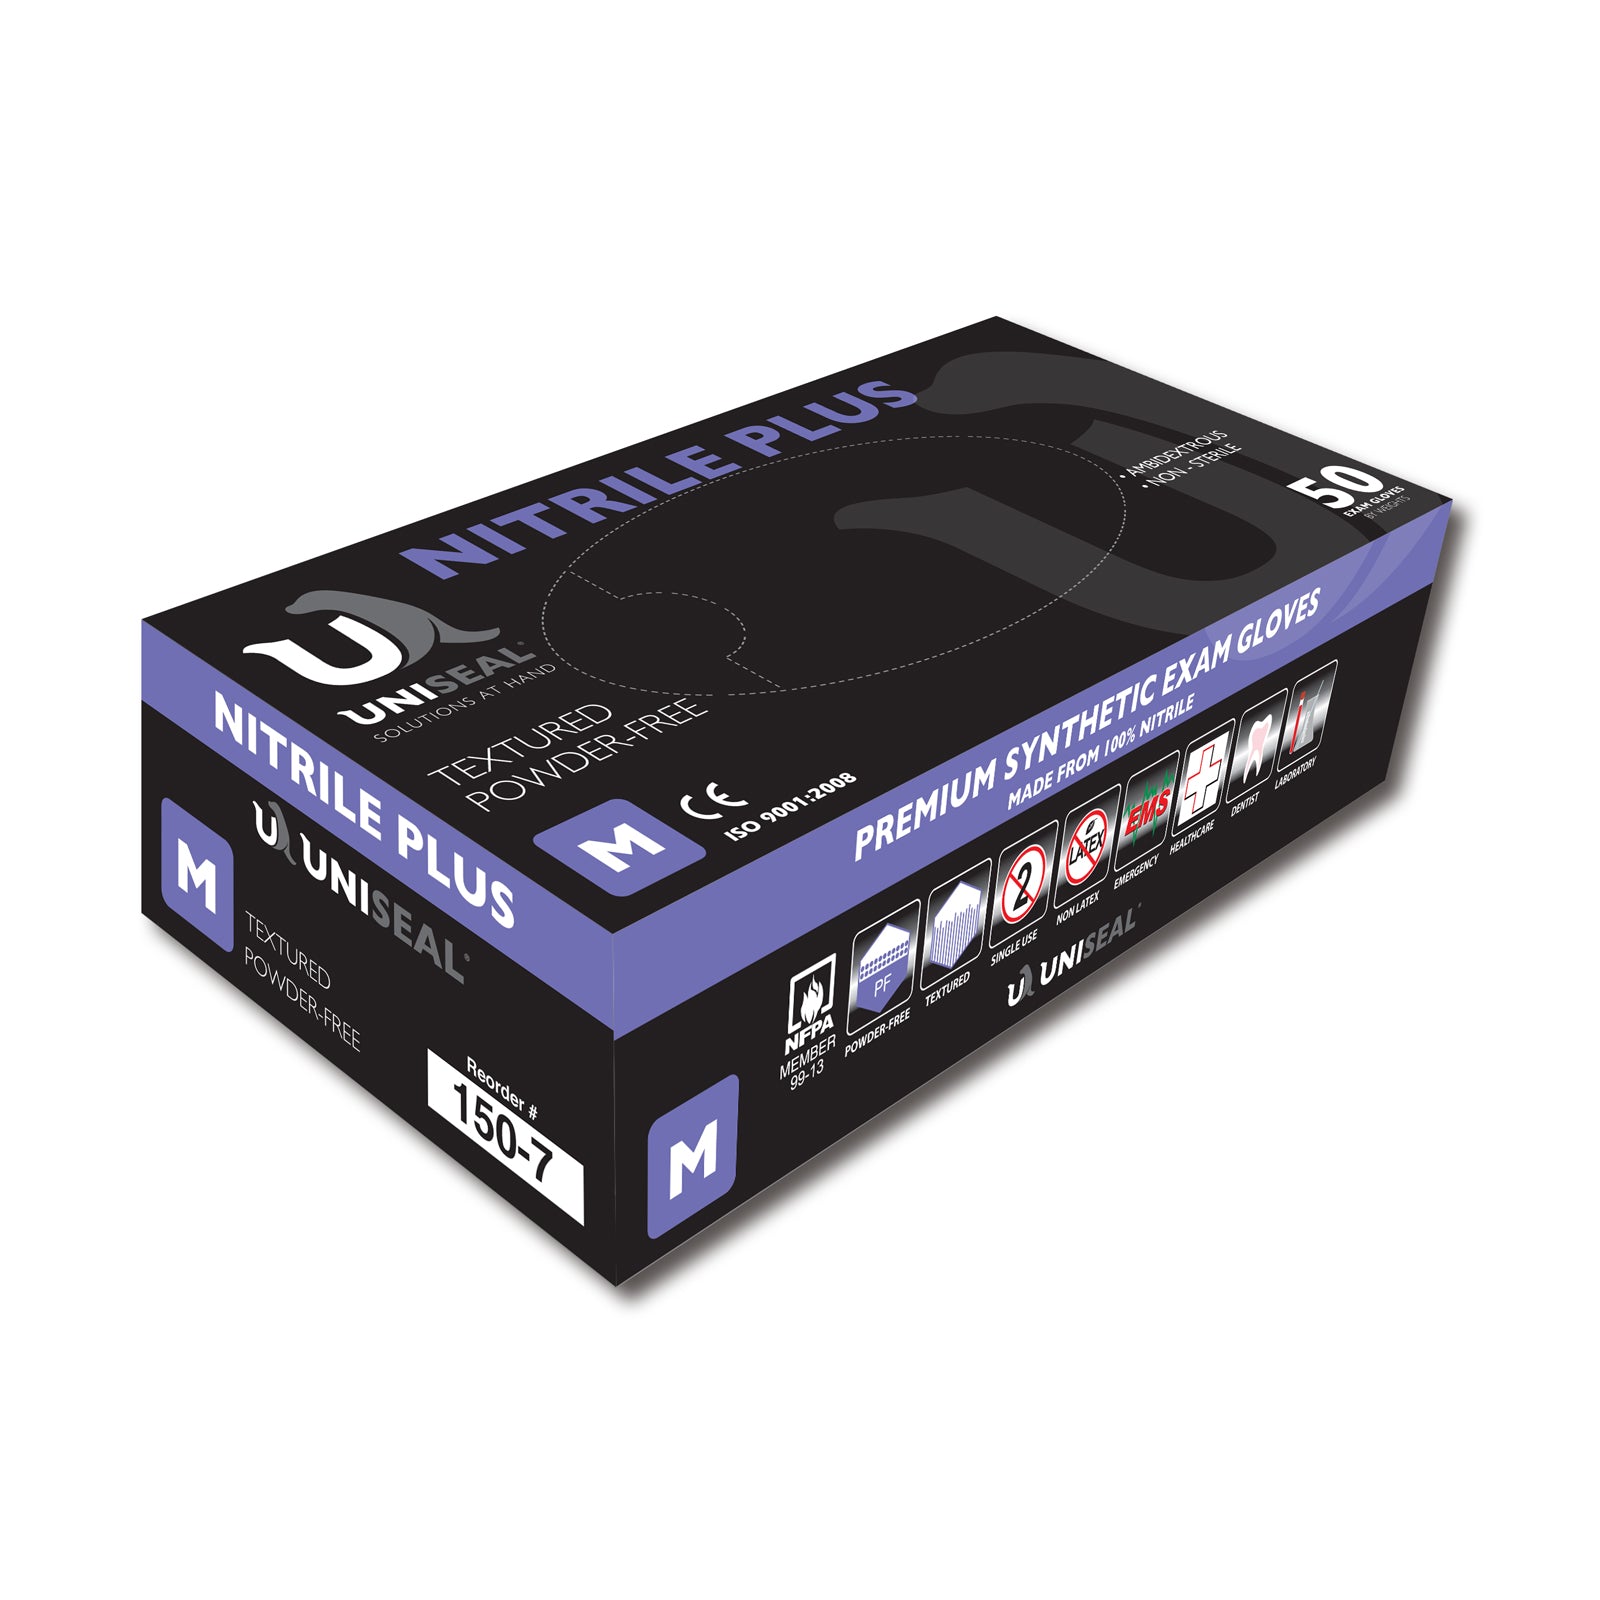 Uniseal-Nitrile Exam Gloves - Nitrile Plus Powder-Free-eSafety Supplies, Inc